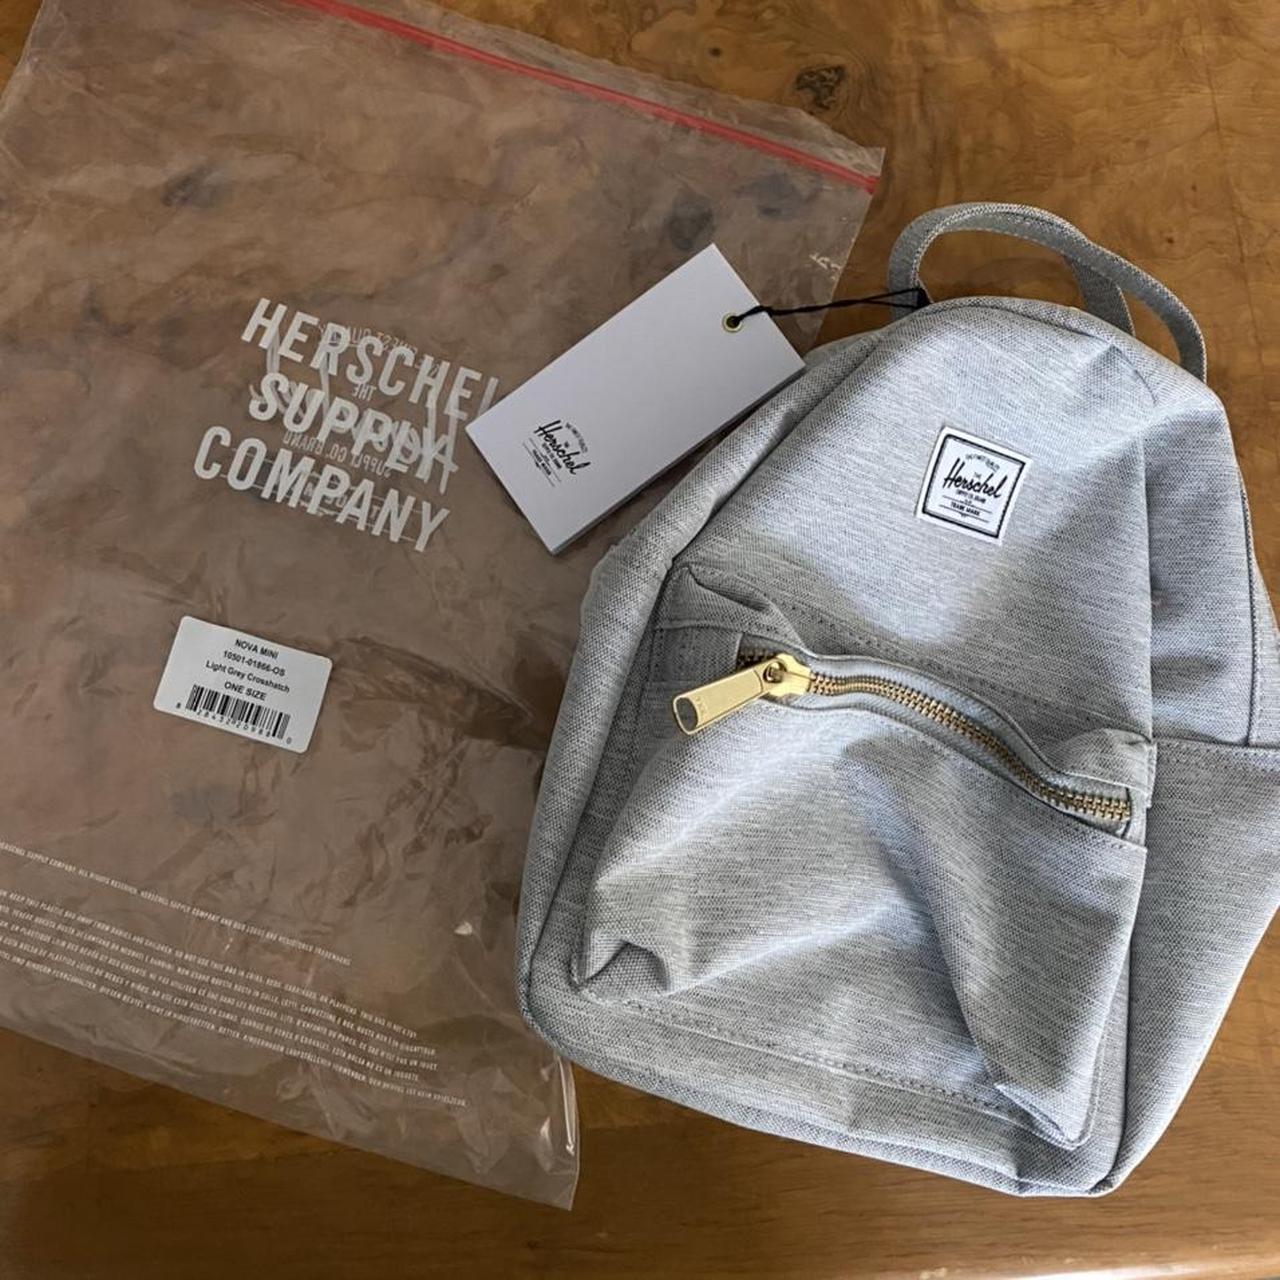 Herschel Nova Mini Backpack